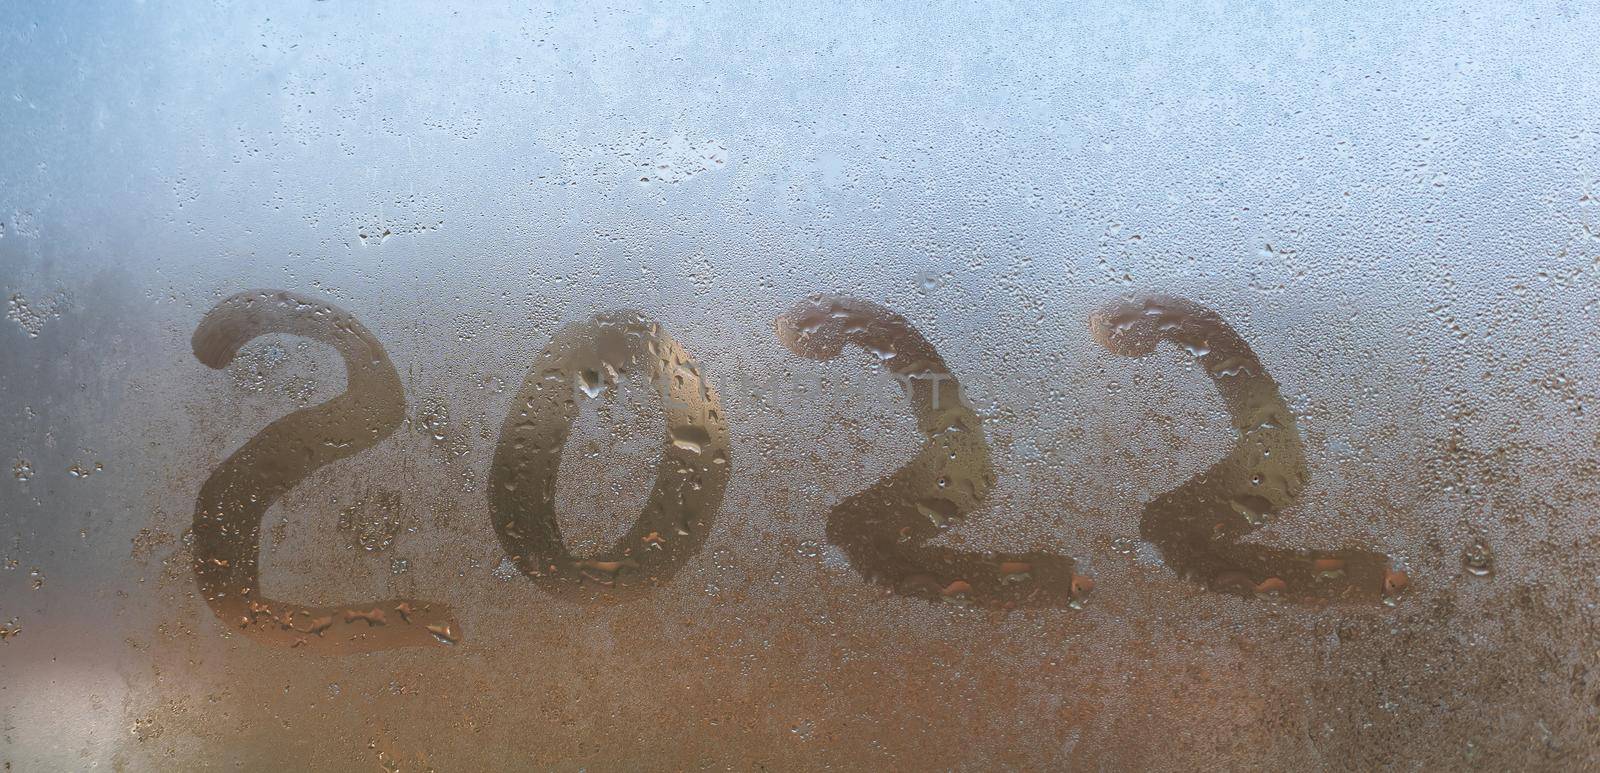 Handwritten word 2022 on a foggy window by Andelov13